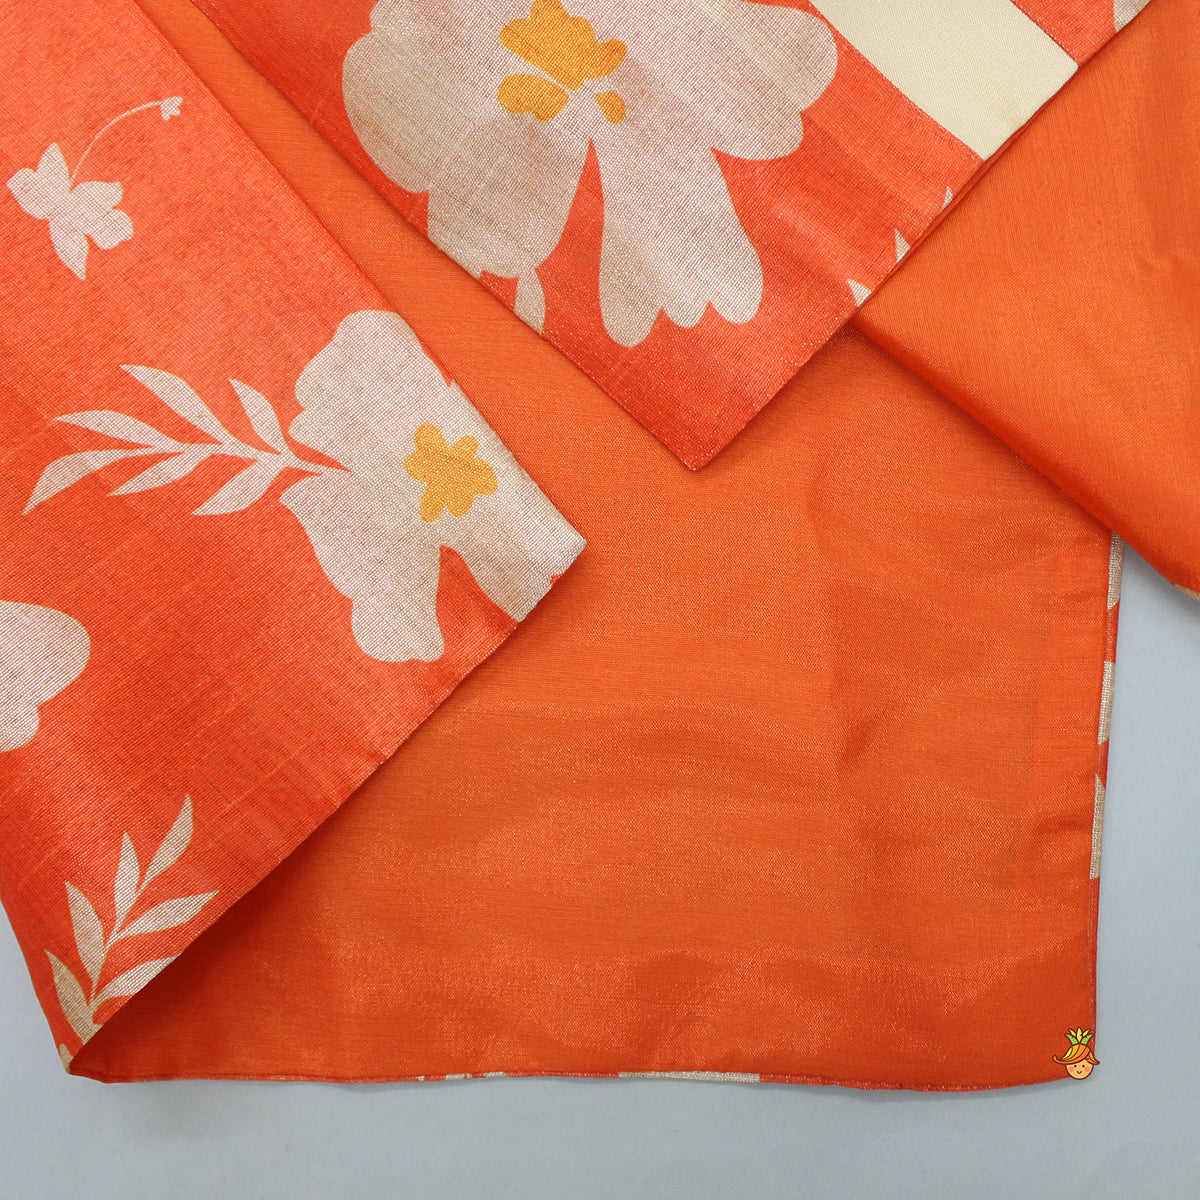 Pre Order: Floral Printed Orange Kurta With Pyjama